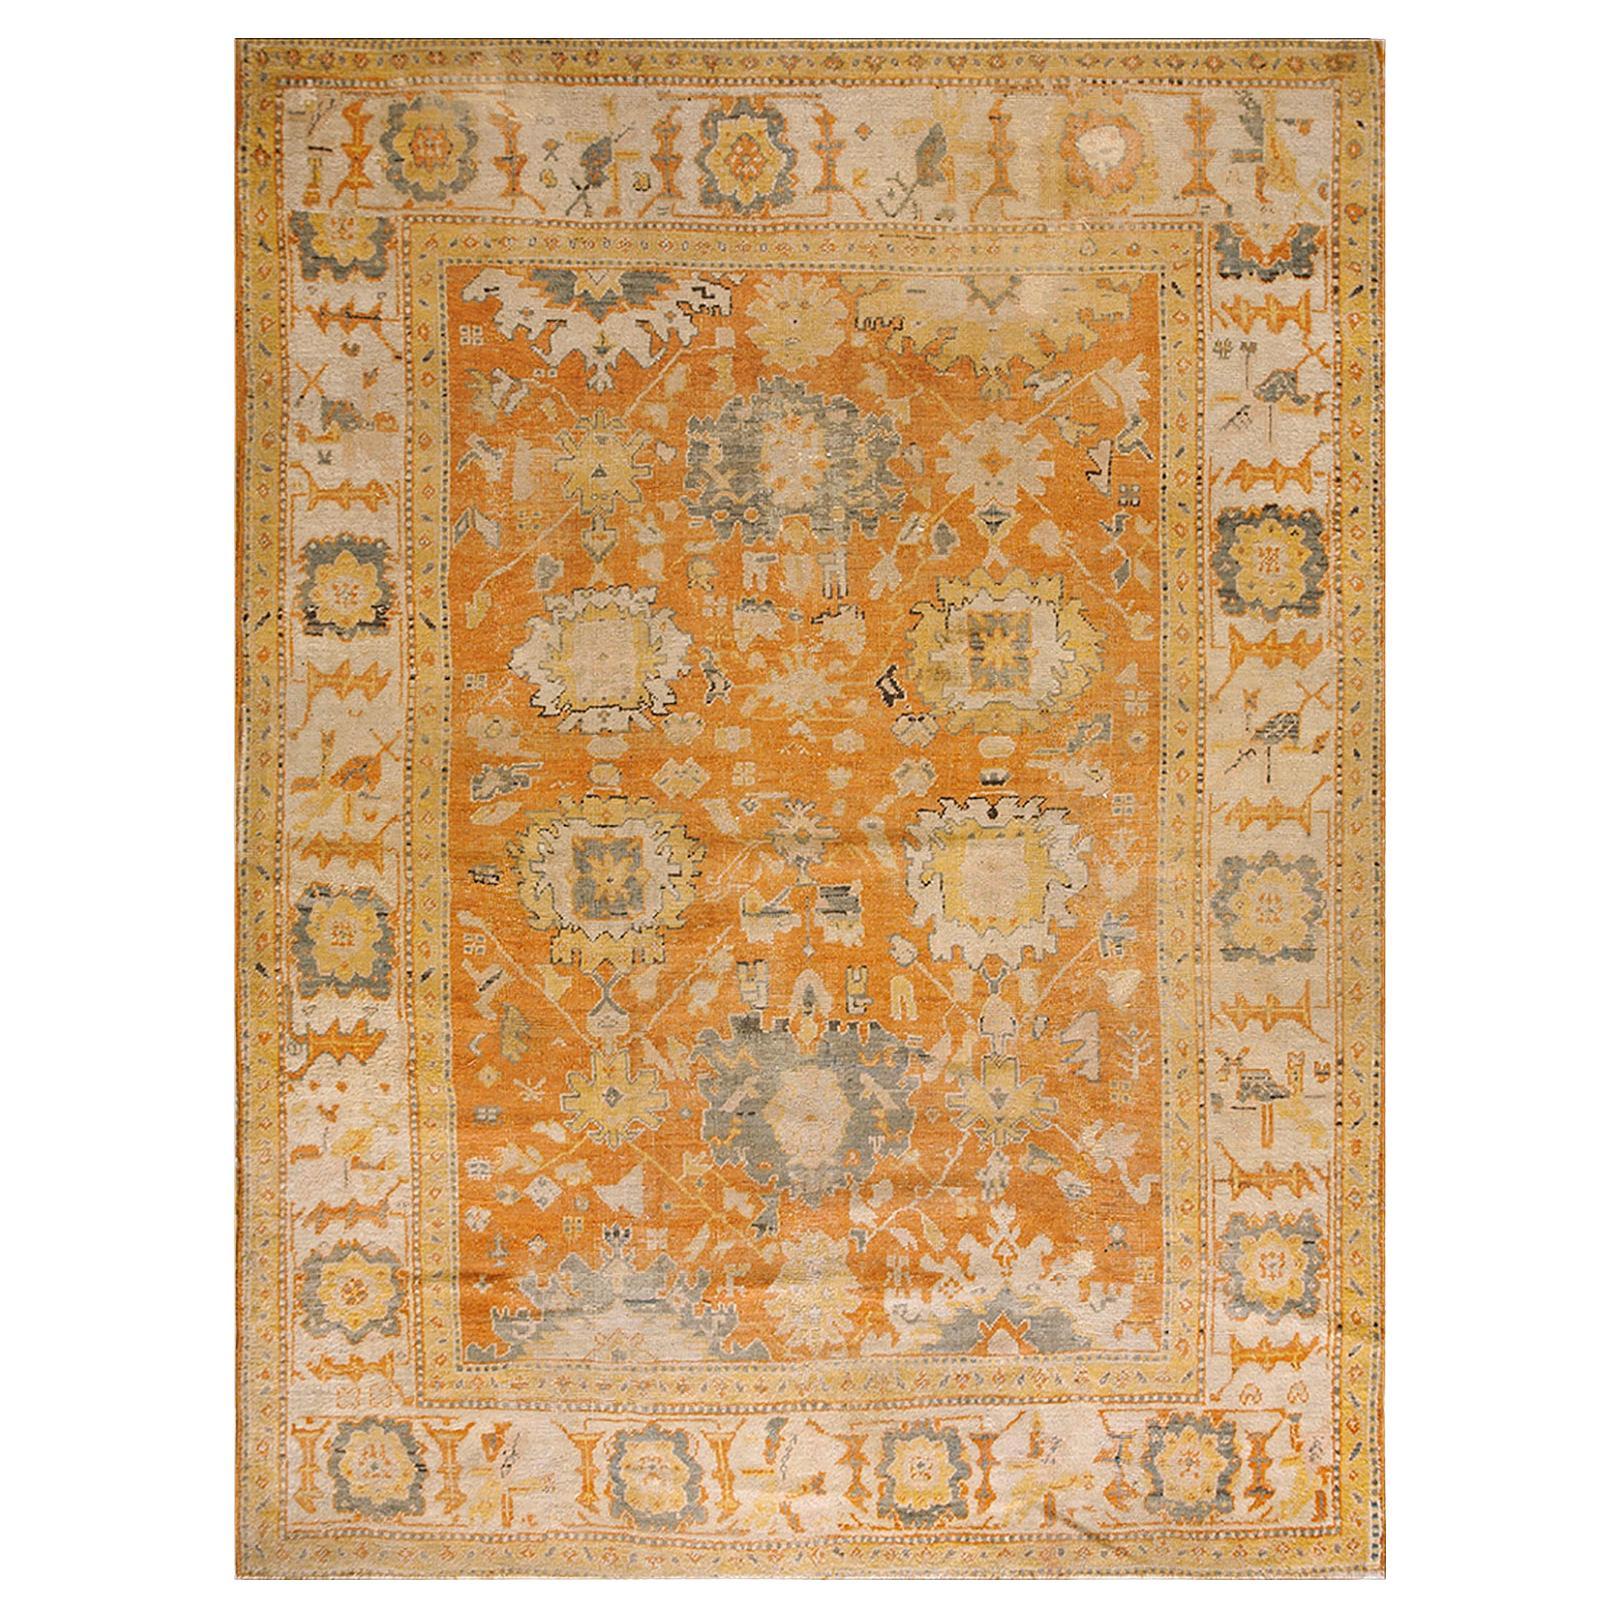 Late 19th Century Turkish Anatolian Oushak Carpet (8'4''x 11'2'' - 254 x 340 cm) For Sale